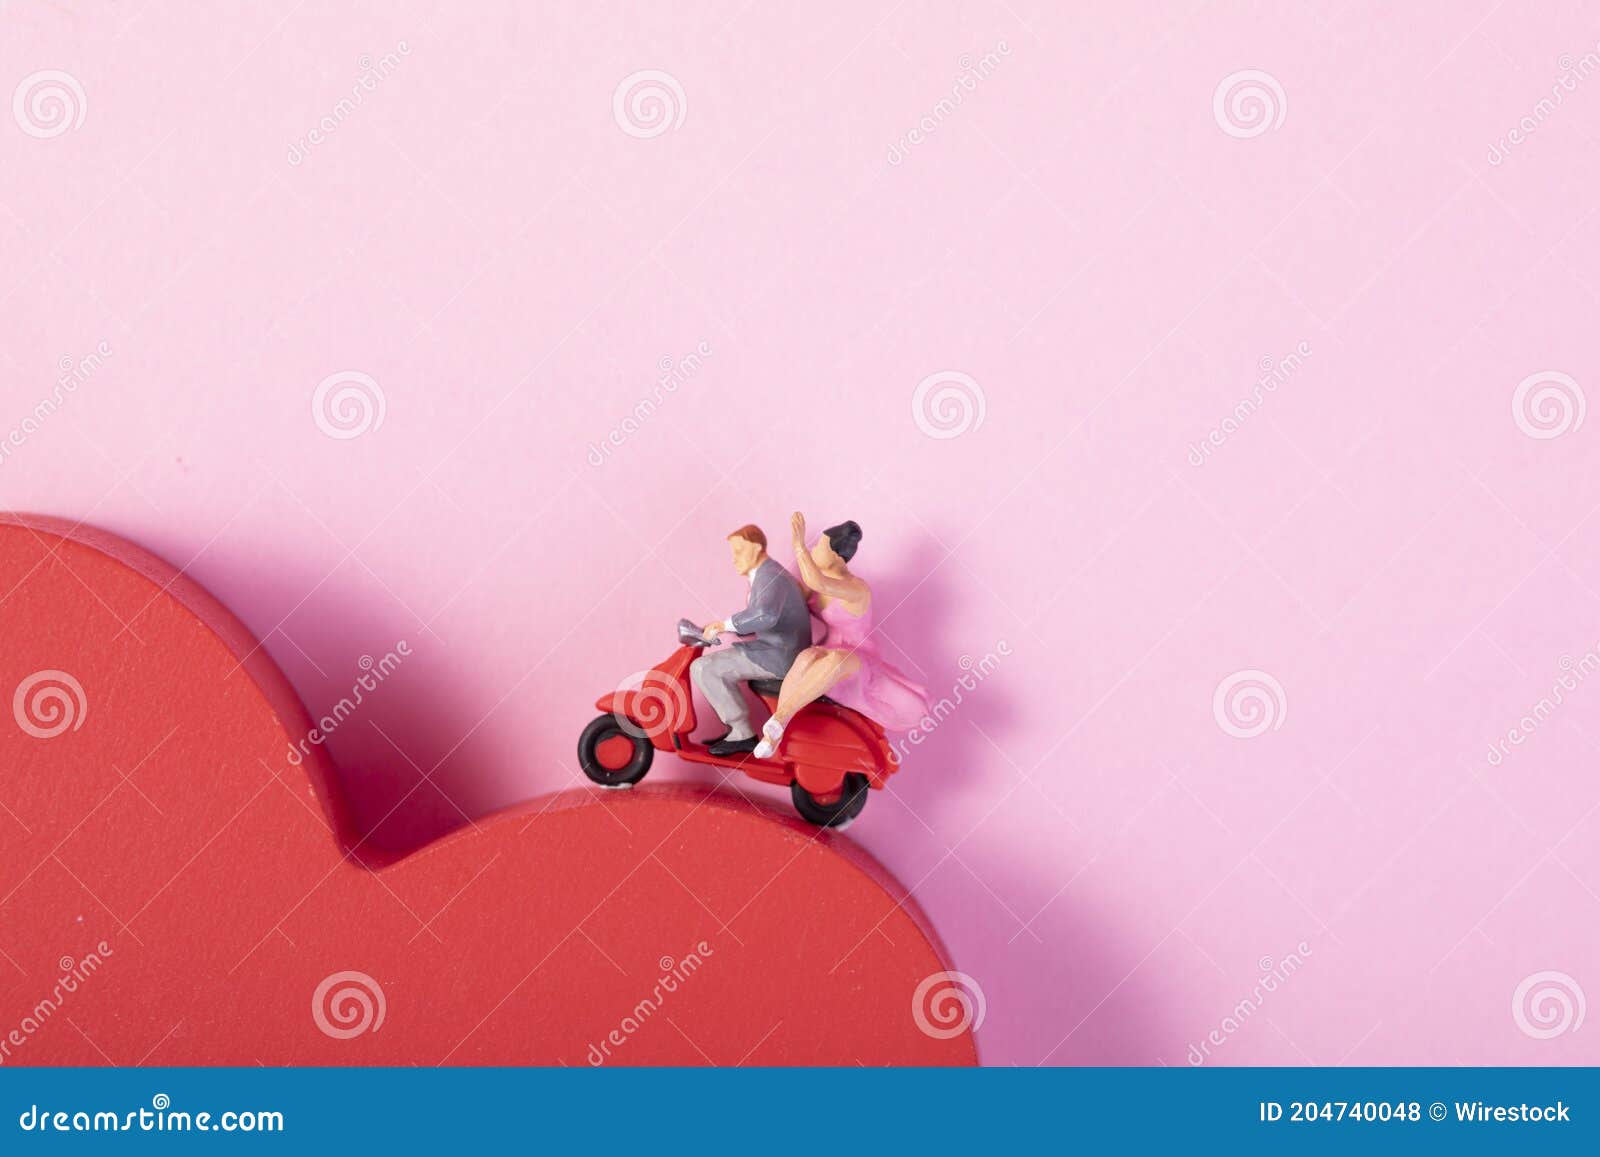 Creative Shot of Valentine S Day Romantic Doll Couple Stock Photo ...